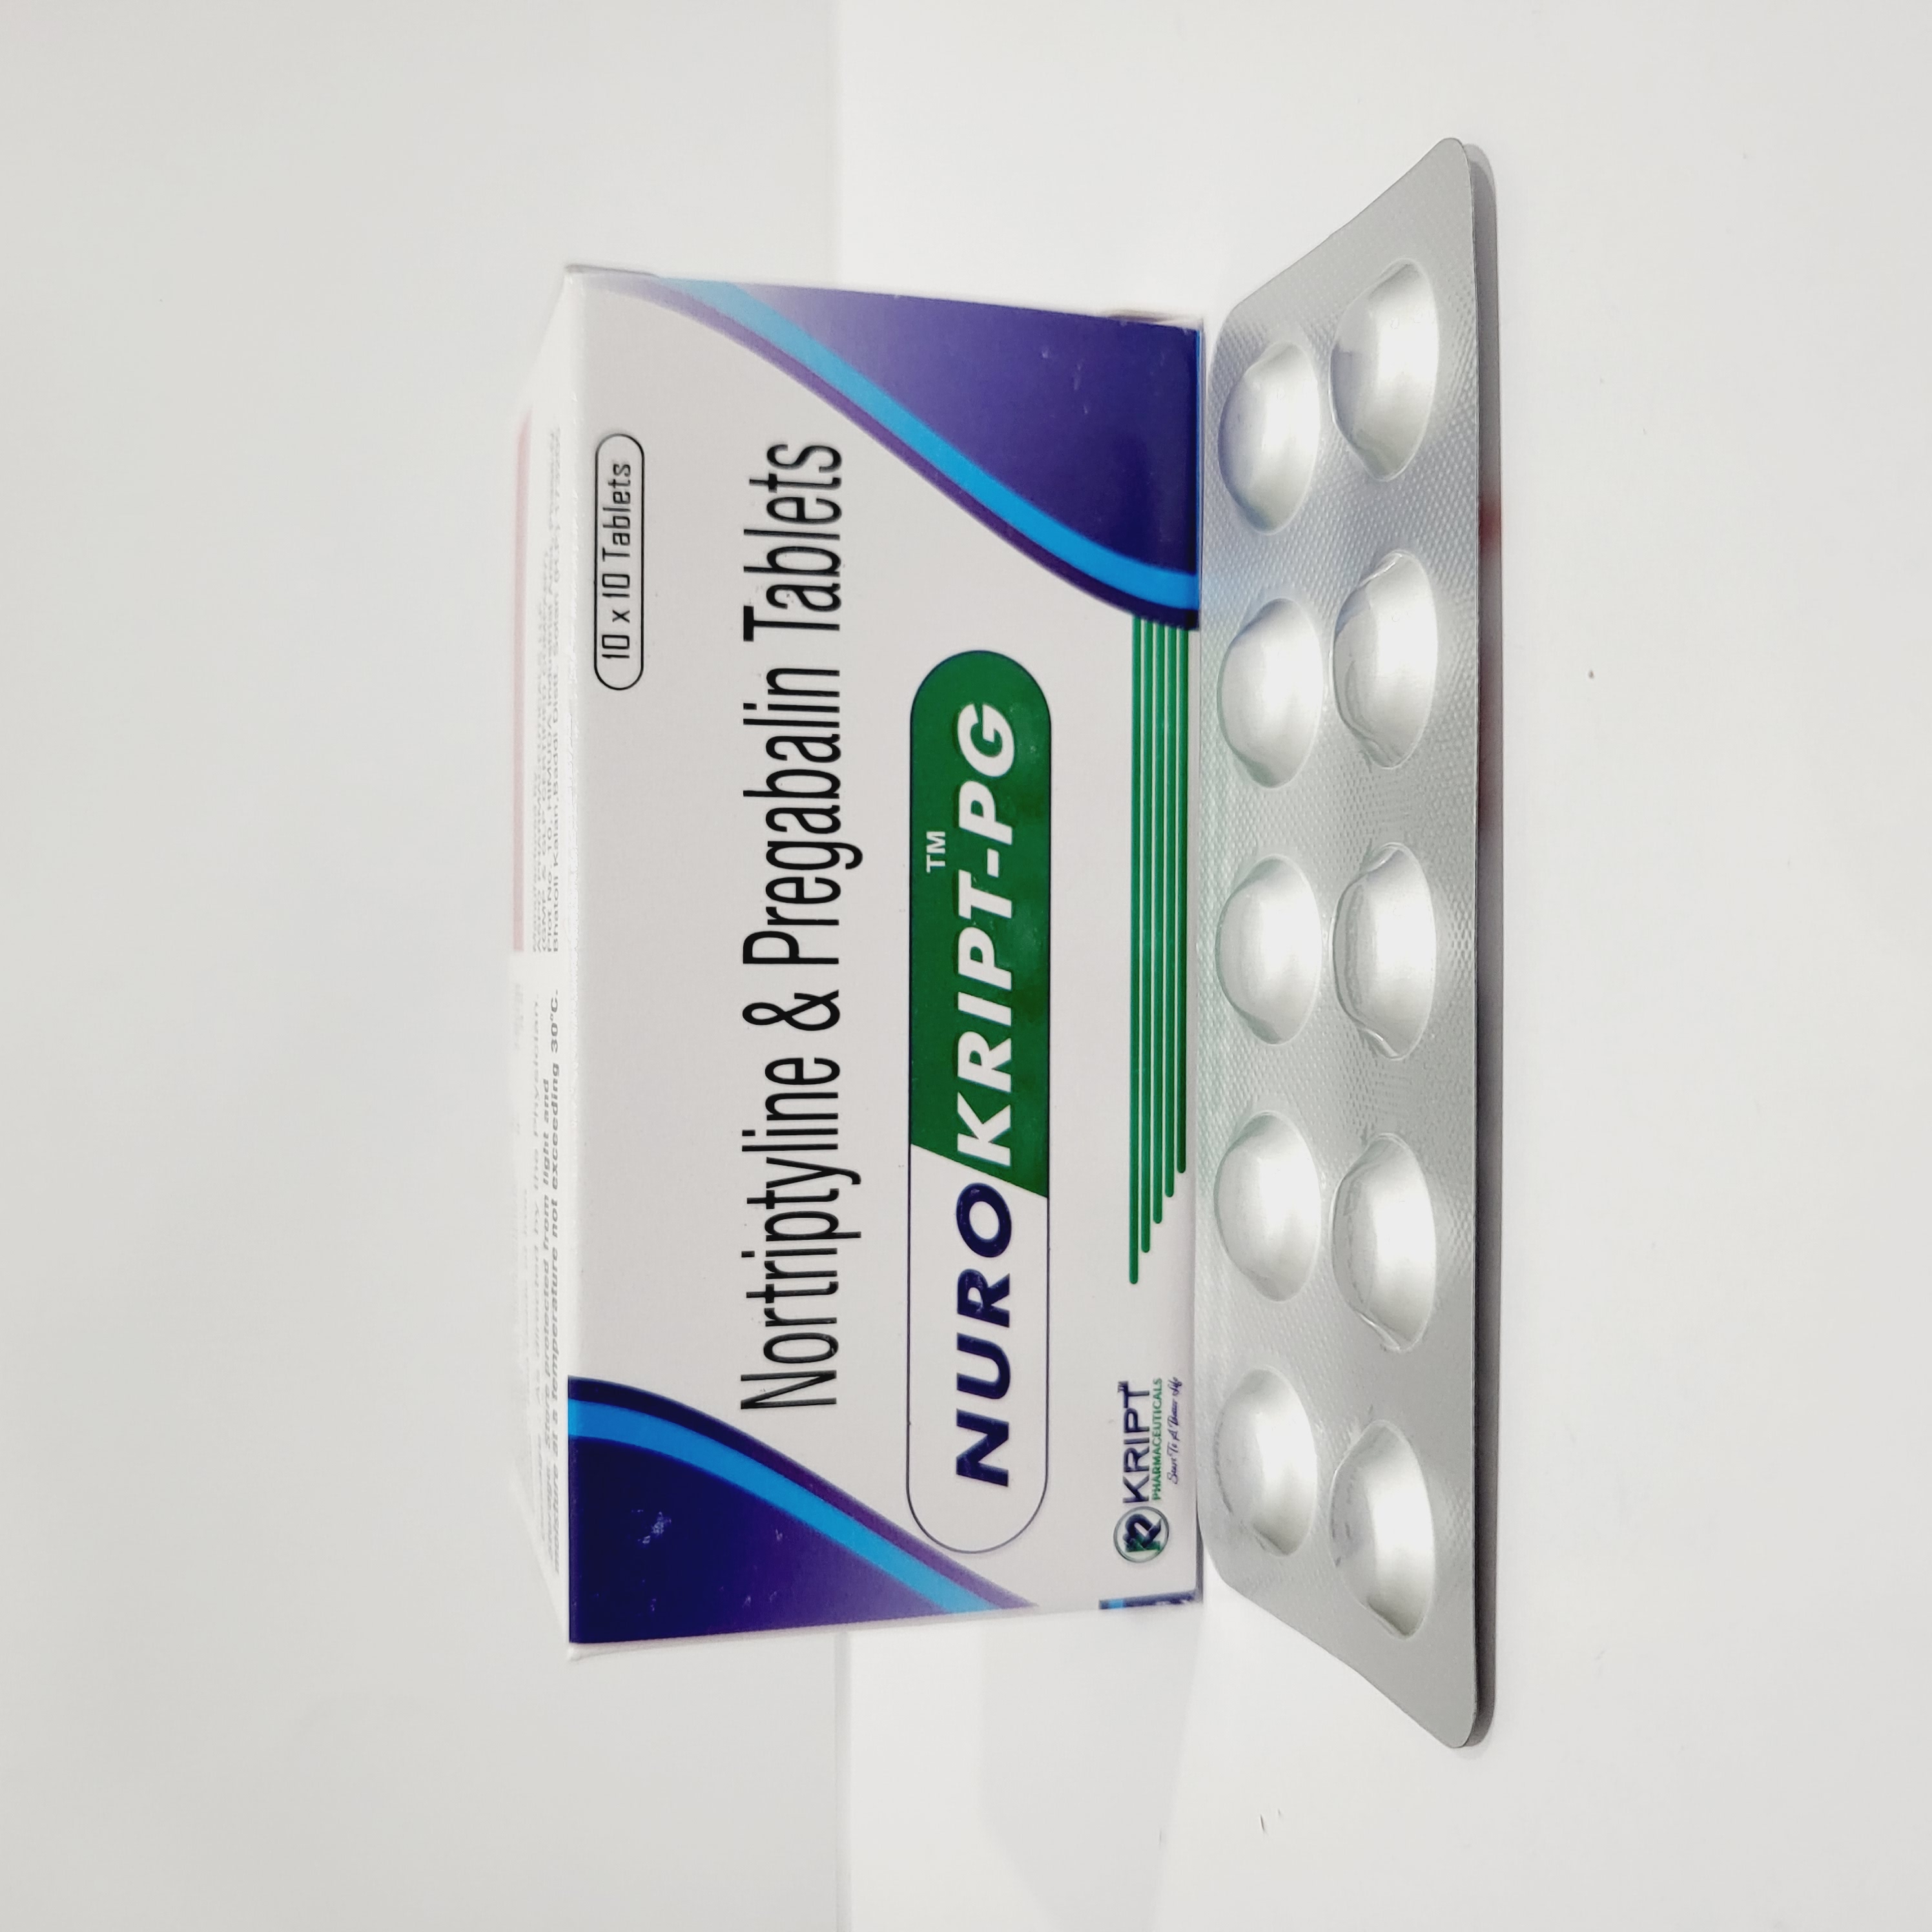 Product Name: NuroKript PG, Compositions of NuroKript PG are Nortriptyline & Pregabalin tablets - Kript Pharmaceuticals